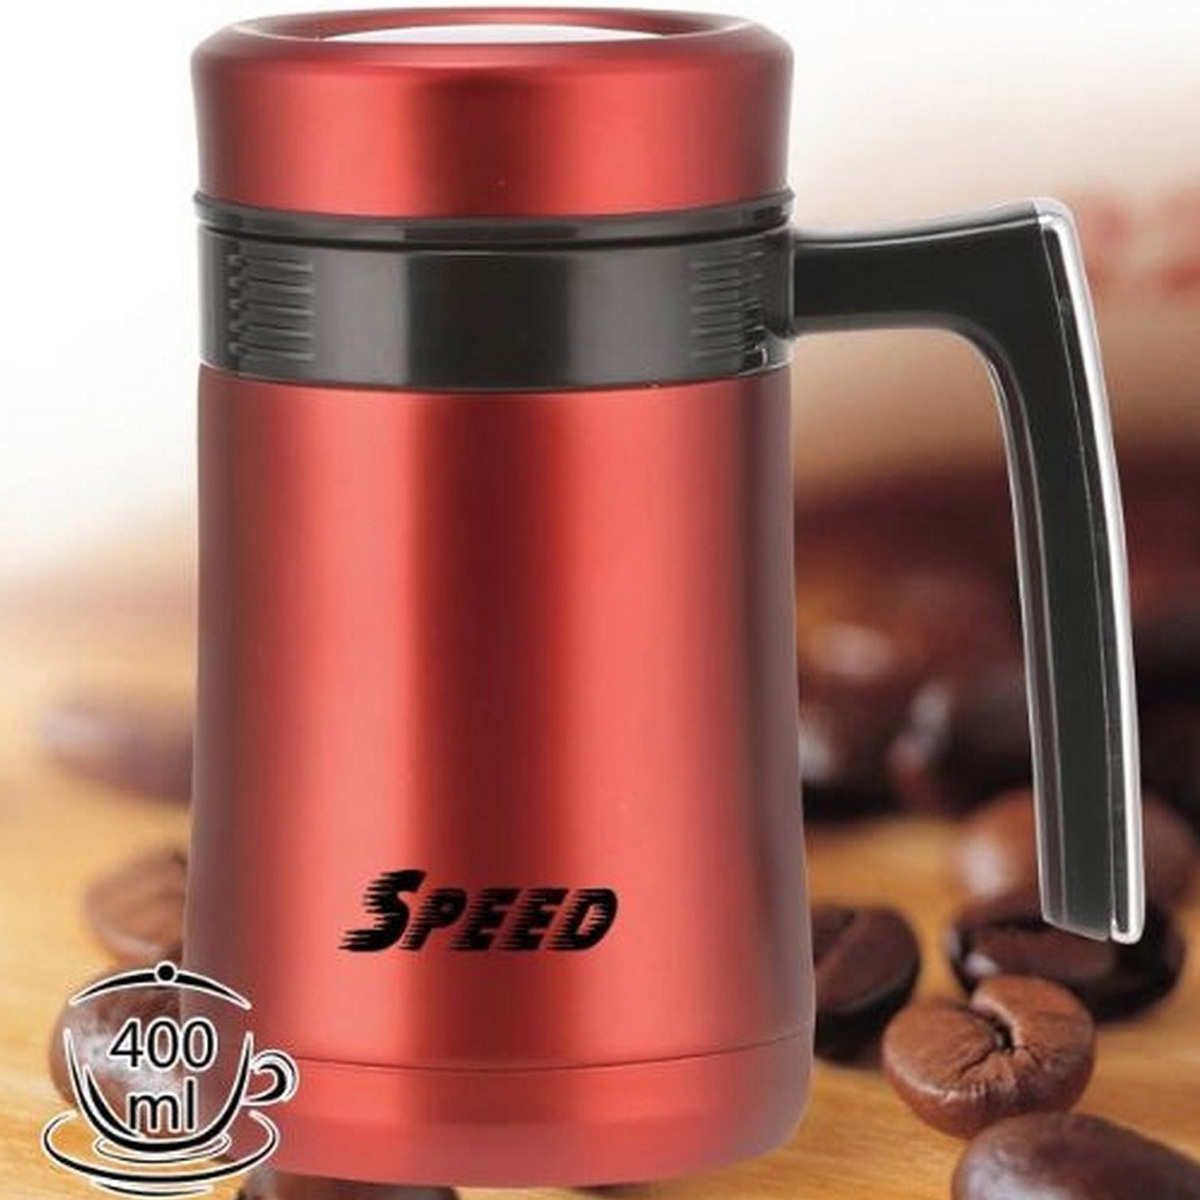 Speed Vaccum Coffee Flask BESB16 400ml